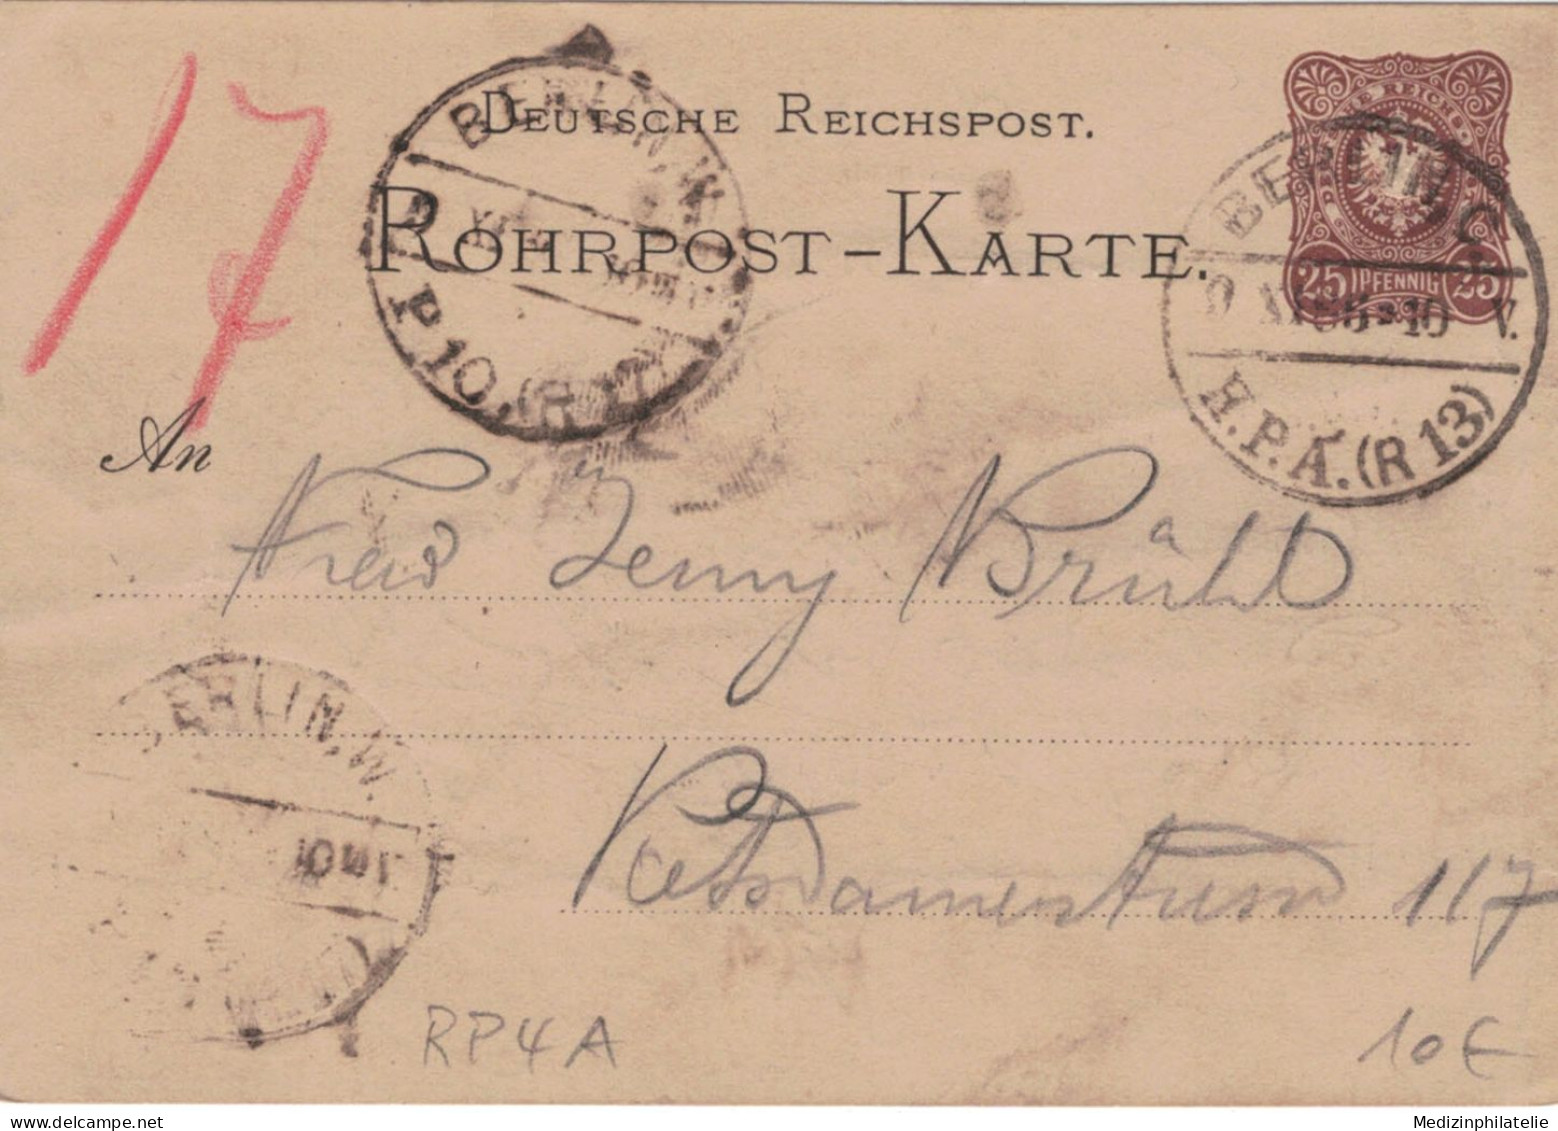 Rohrpost-Karte 25 Pf. Adler In Ellipse - 4 A - Berlin H.P.A. 1886 13 > 17 - Postkarten